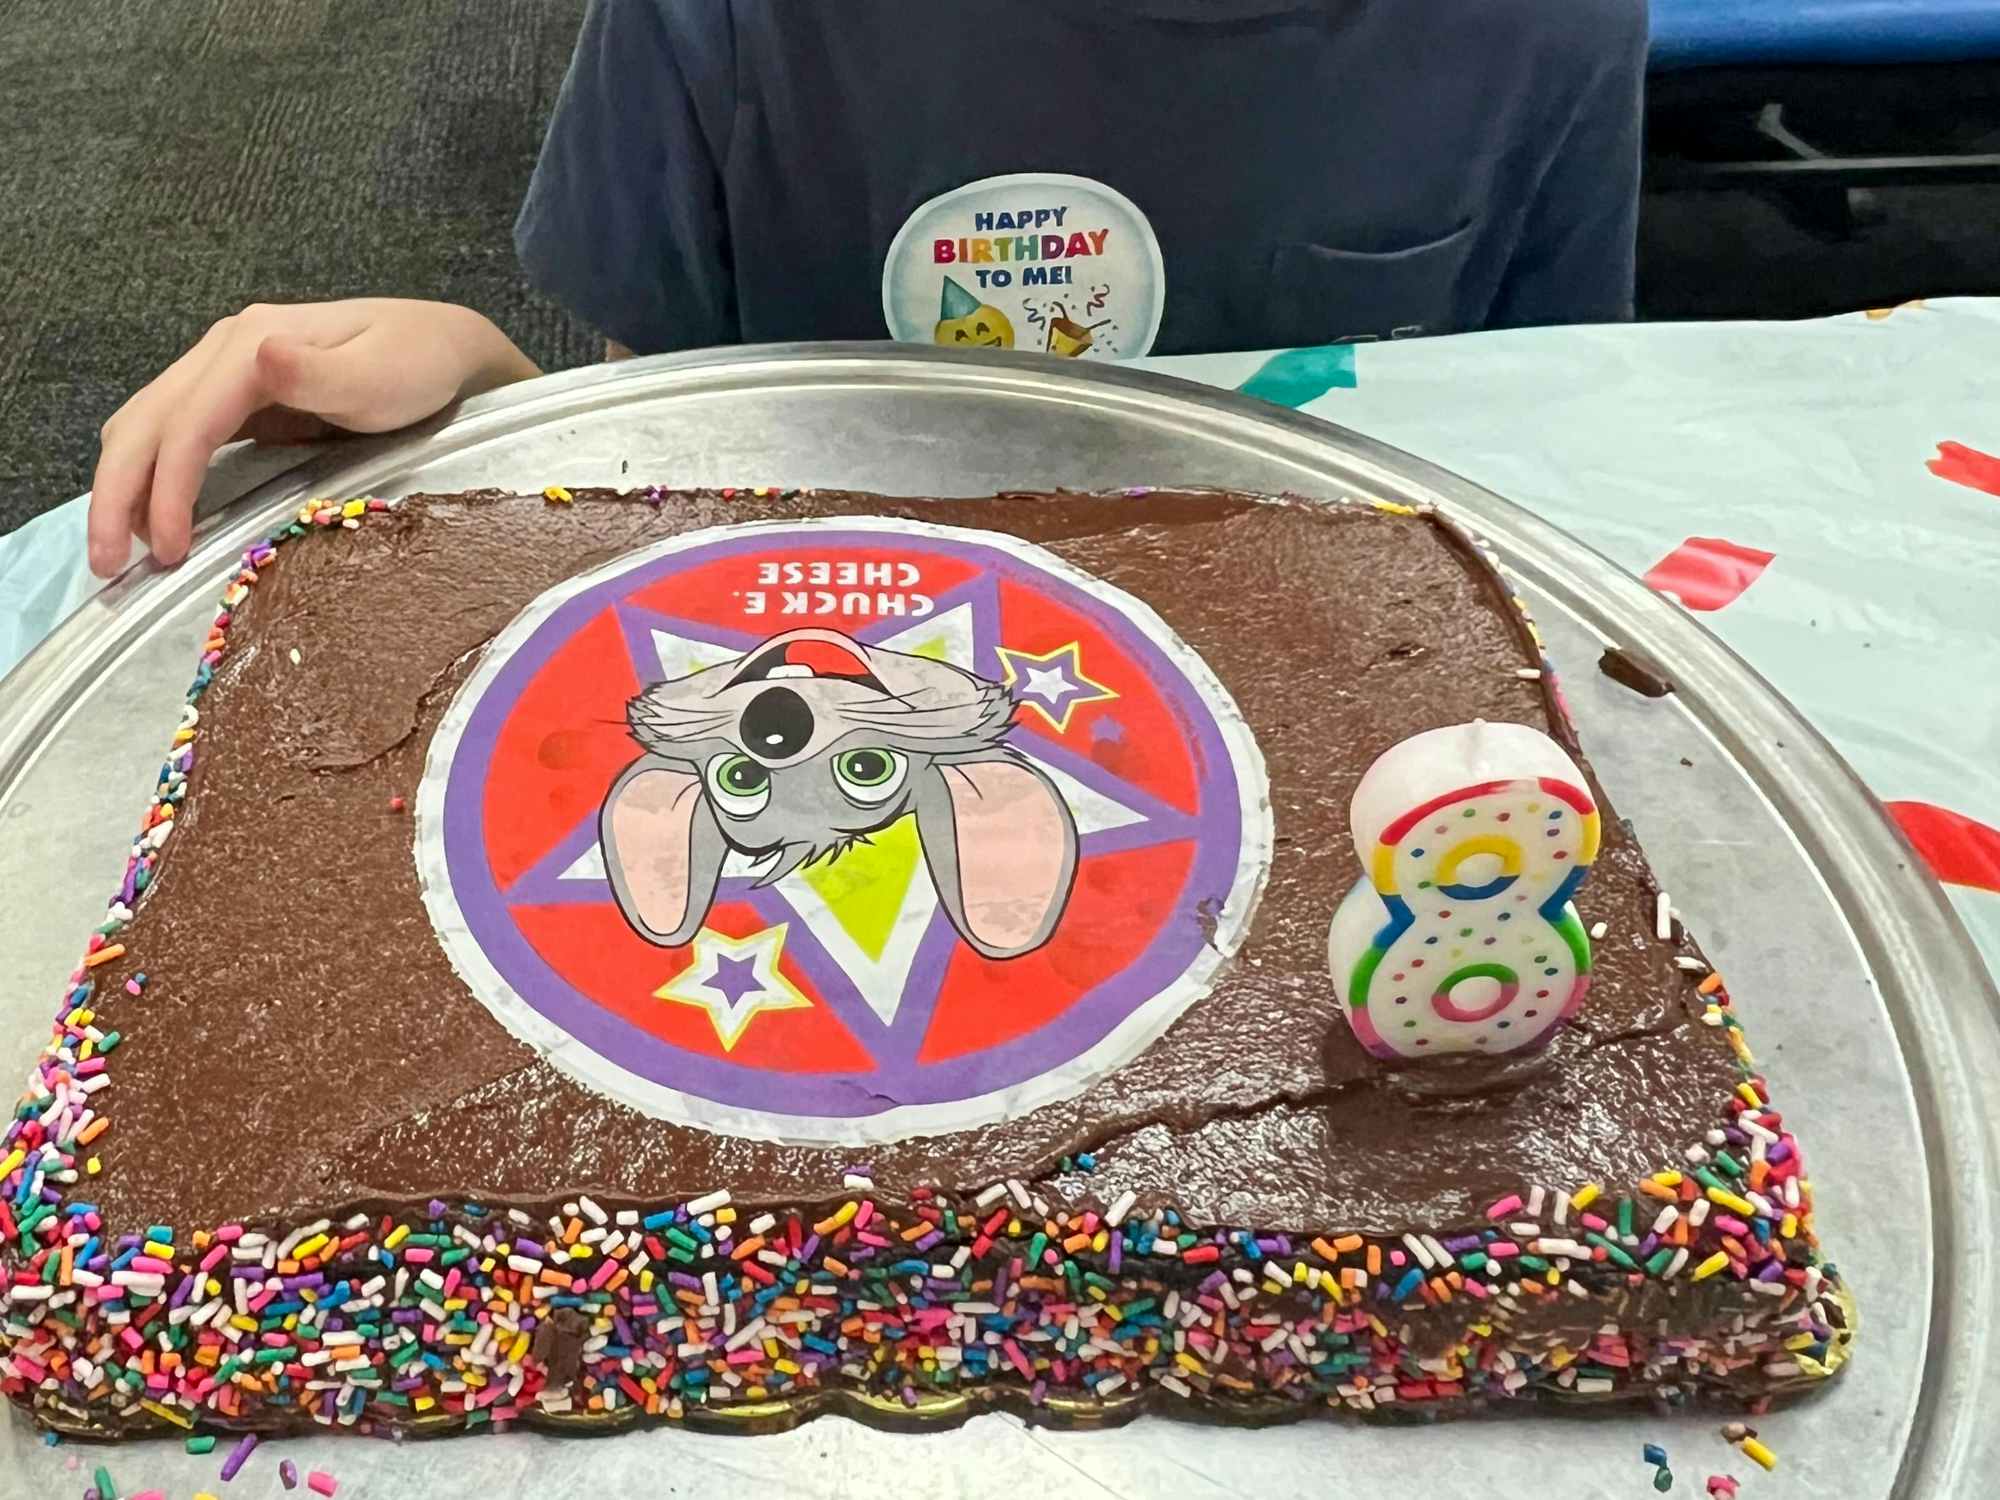 A kid's Chuck E Cheese birthday cake